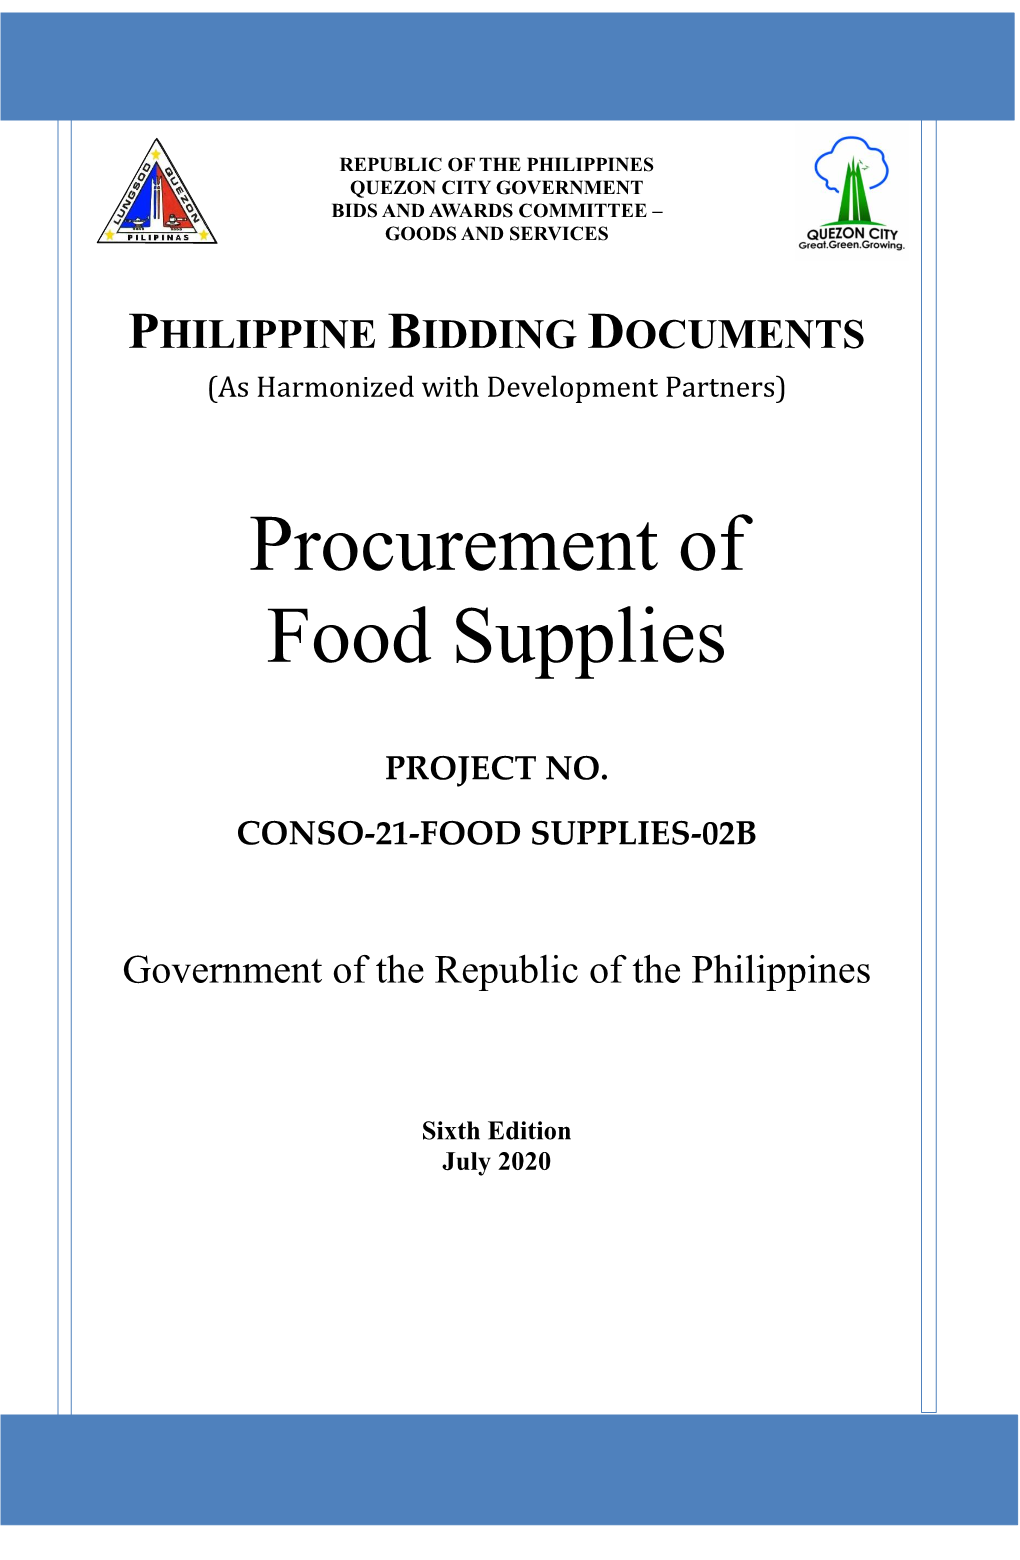 Procurement of Food Supplies